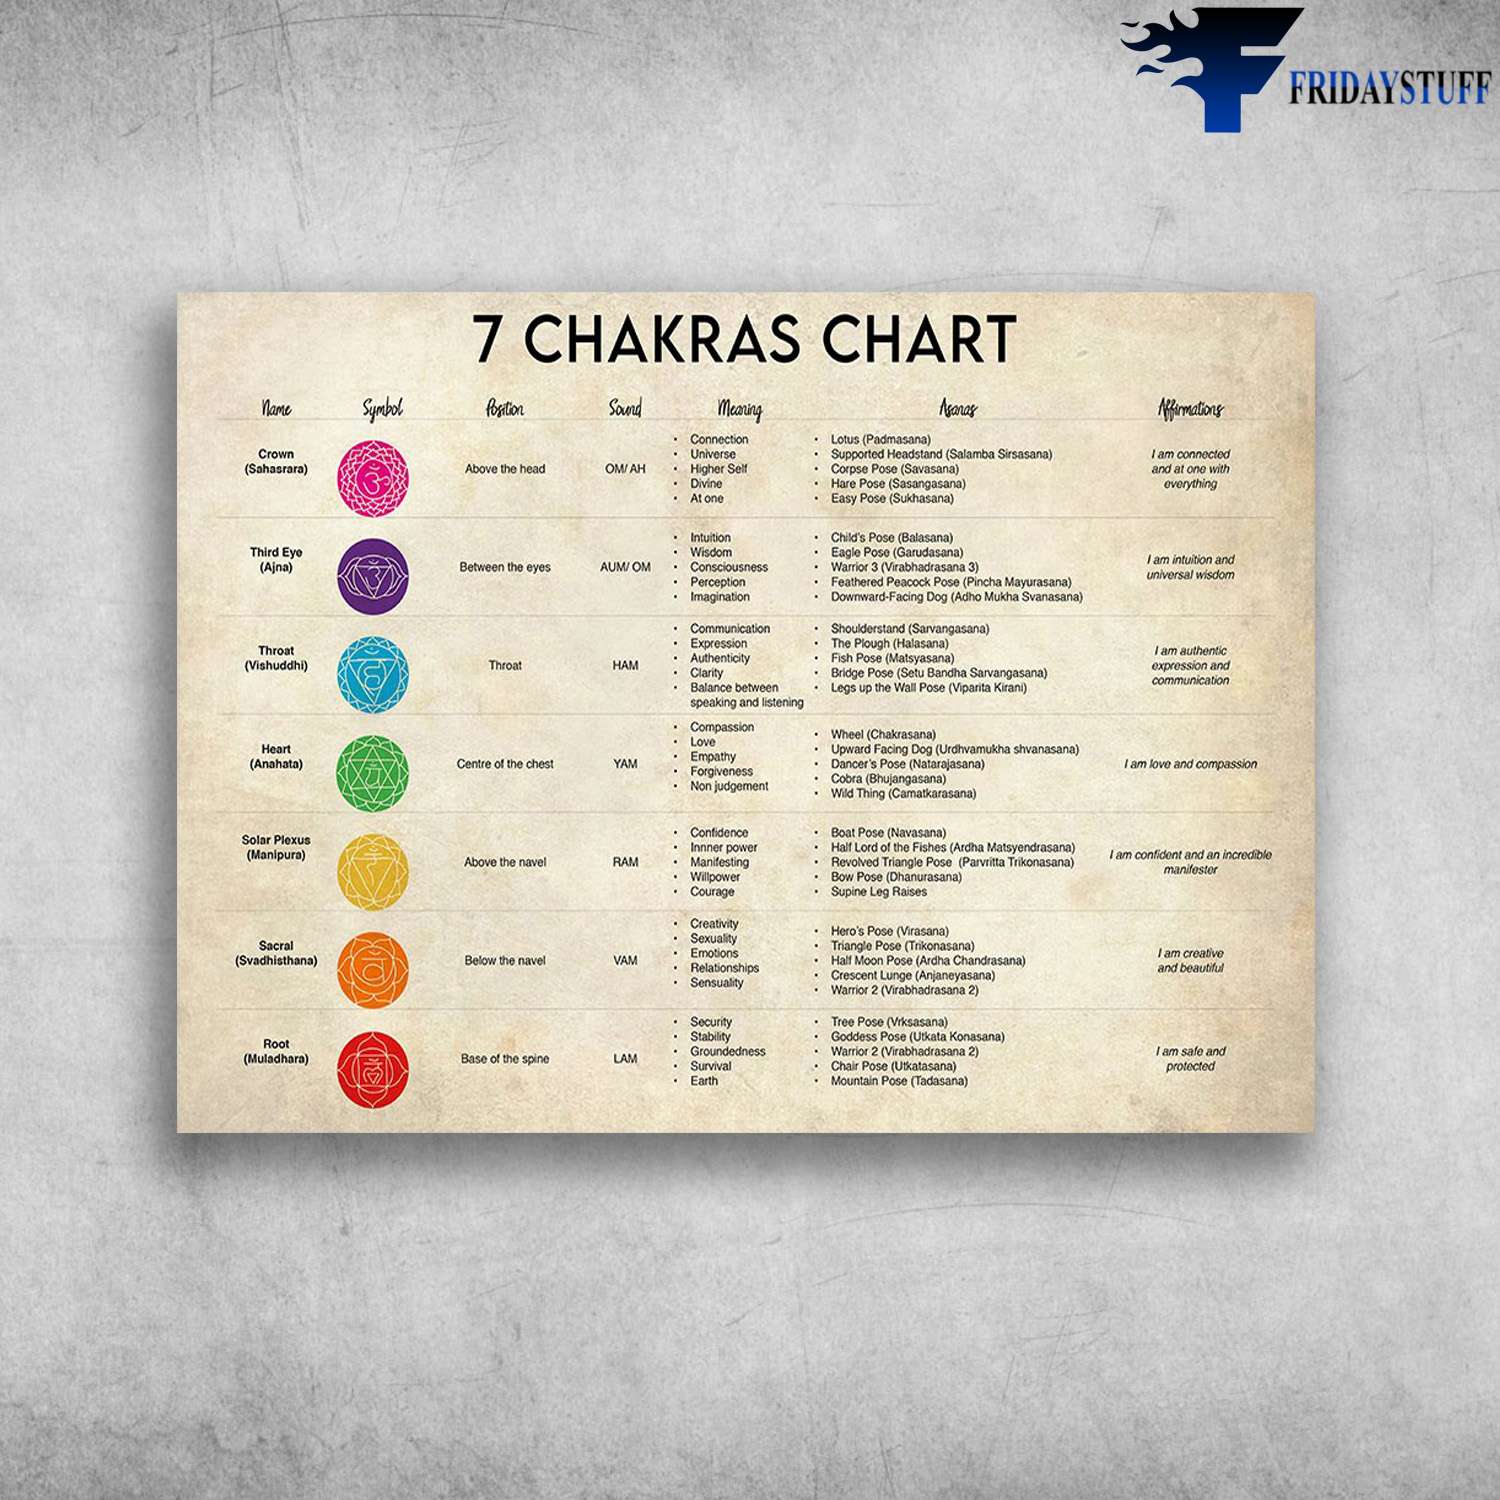 7 Chakras Chart - Crown Sahasrara, Third Eye Ajna, Throat Vishuddhi, Heart Anahata, Solar Piexus, Manipura, Sacral Svadhisthana, Root Muladhara